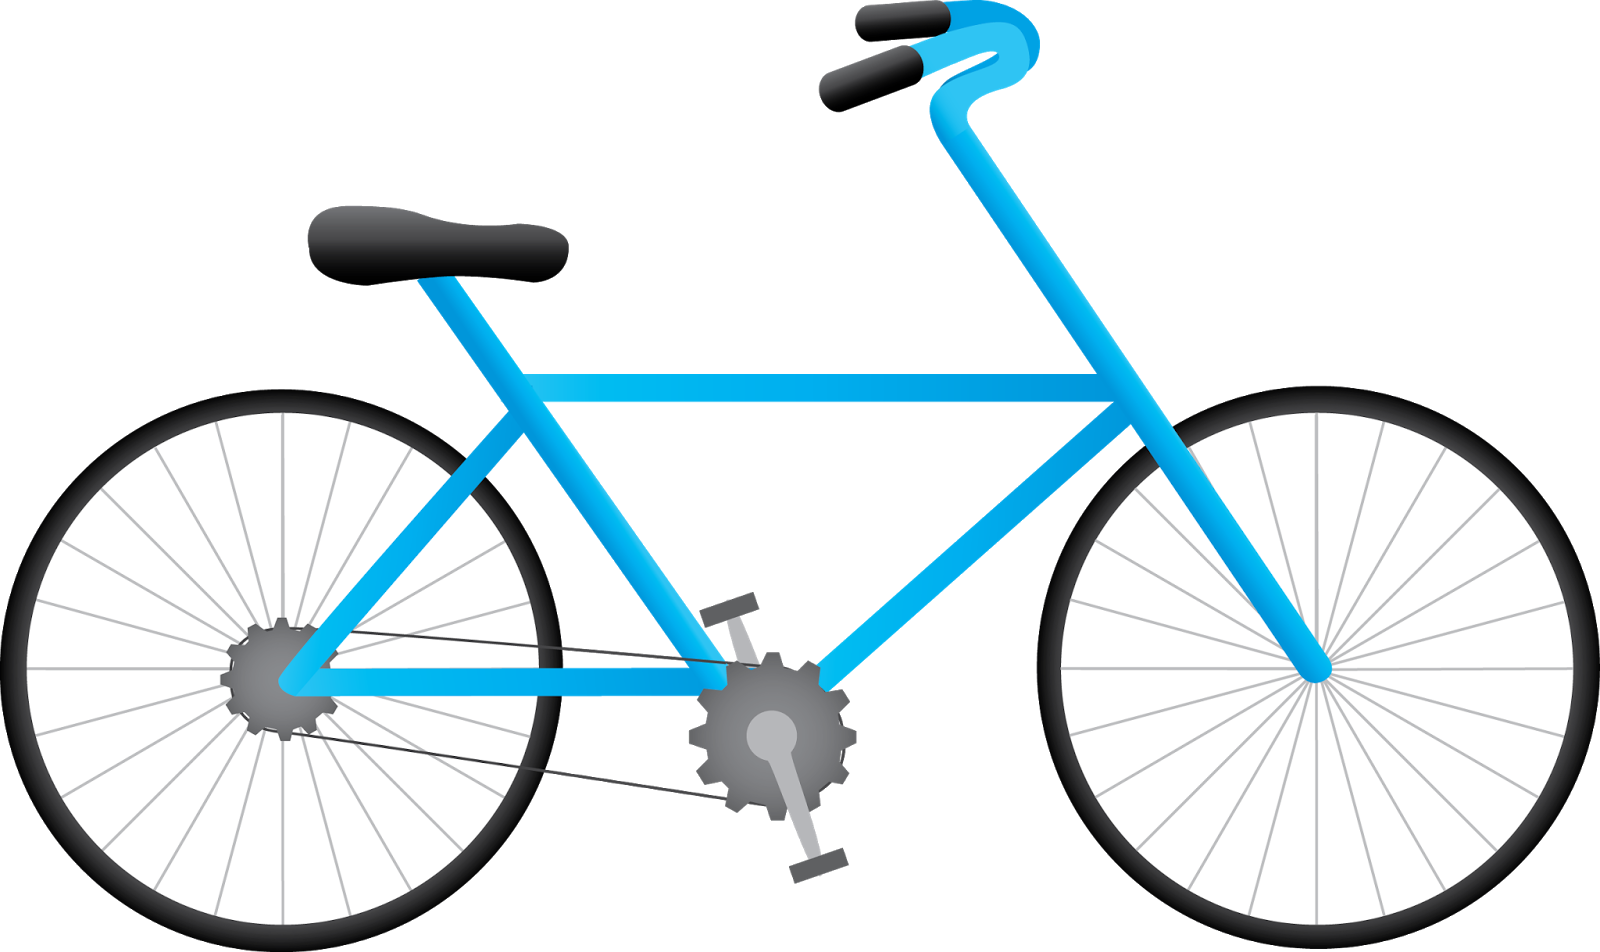 Картинка велосипед. Велосипед спереди прозначныйтфон. Велосипед без фона. Велосипед на белом фоне. Велосипед на прозрачном фоне.